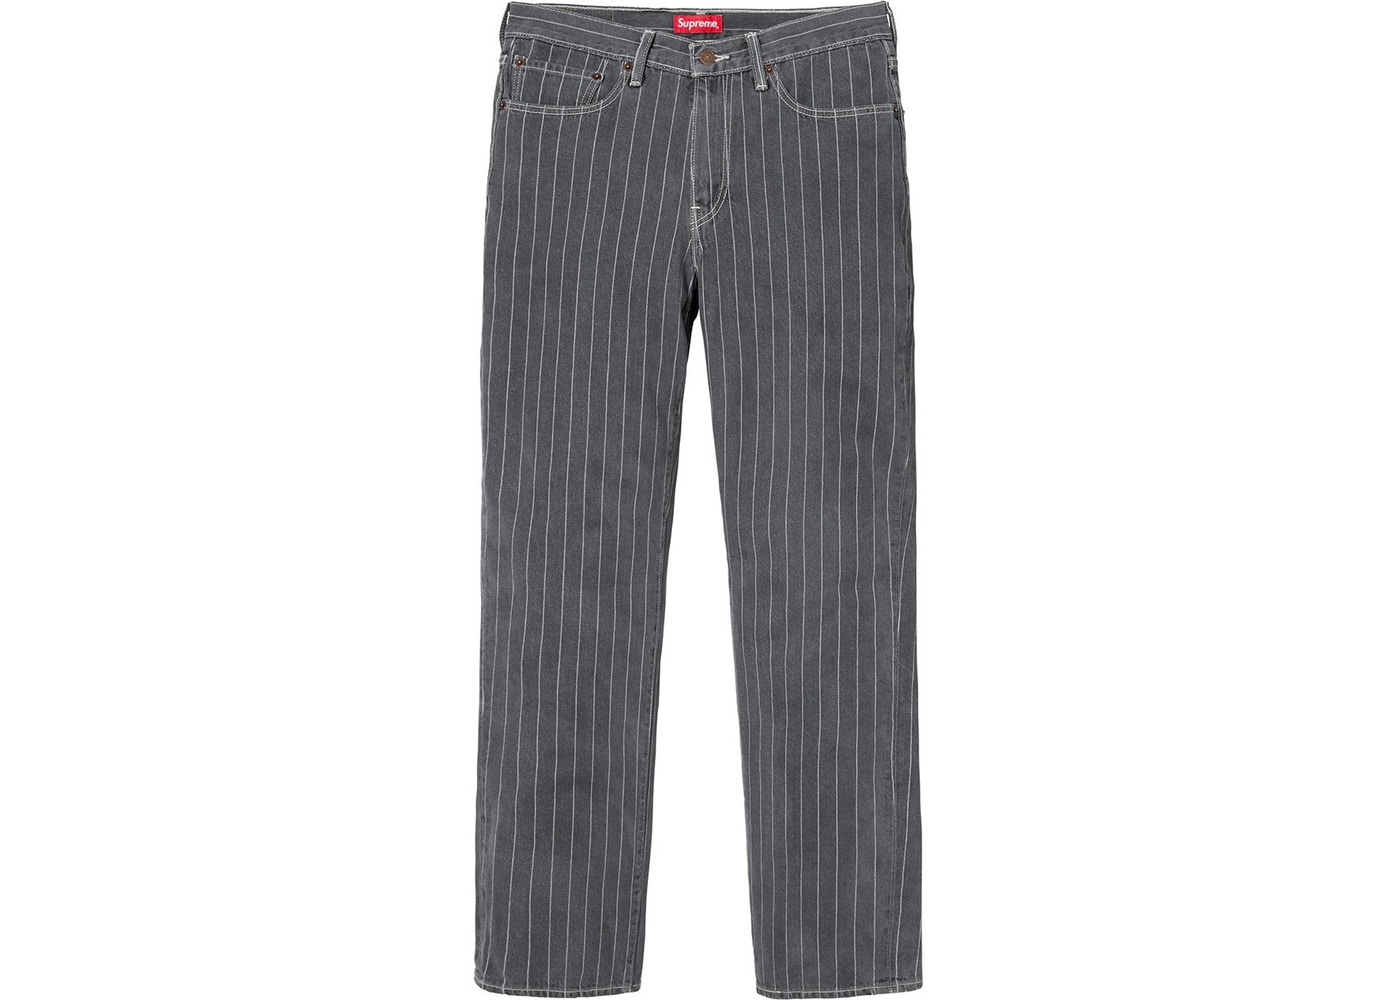 Supreme Levi's pinstripe 550 jeans 32